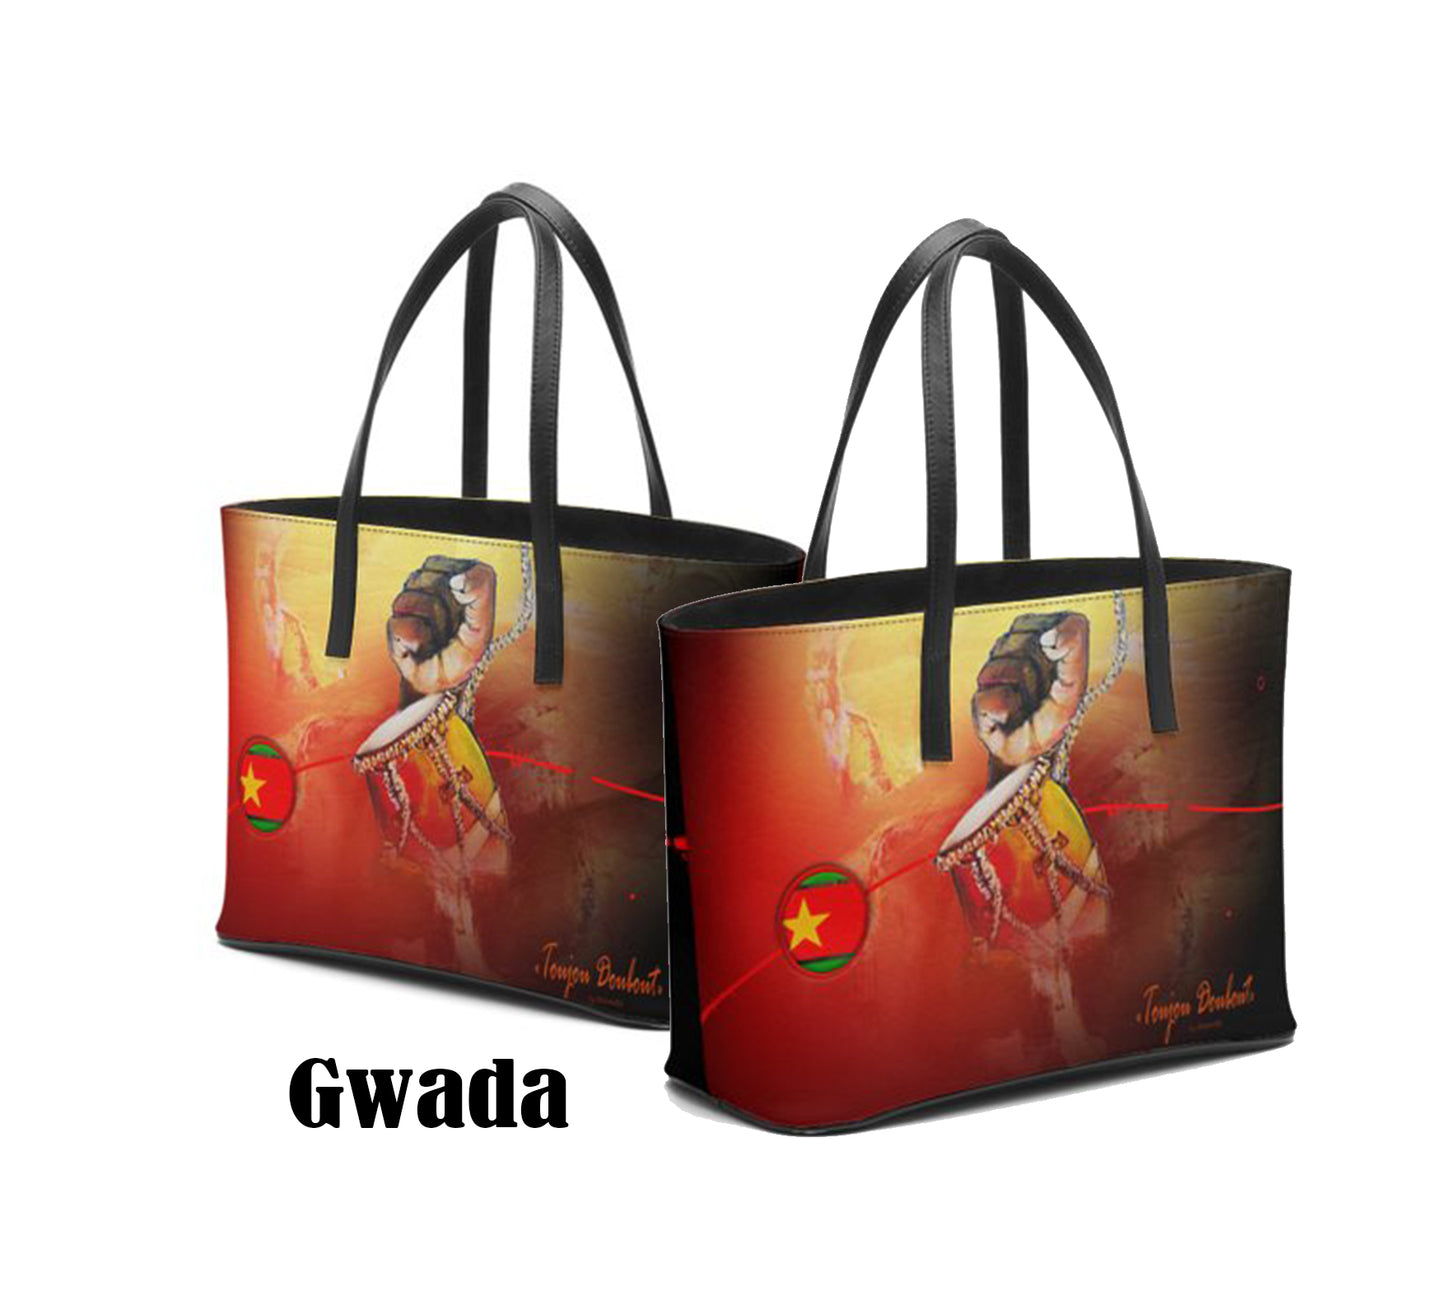 Le sac "Bwadifé"